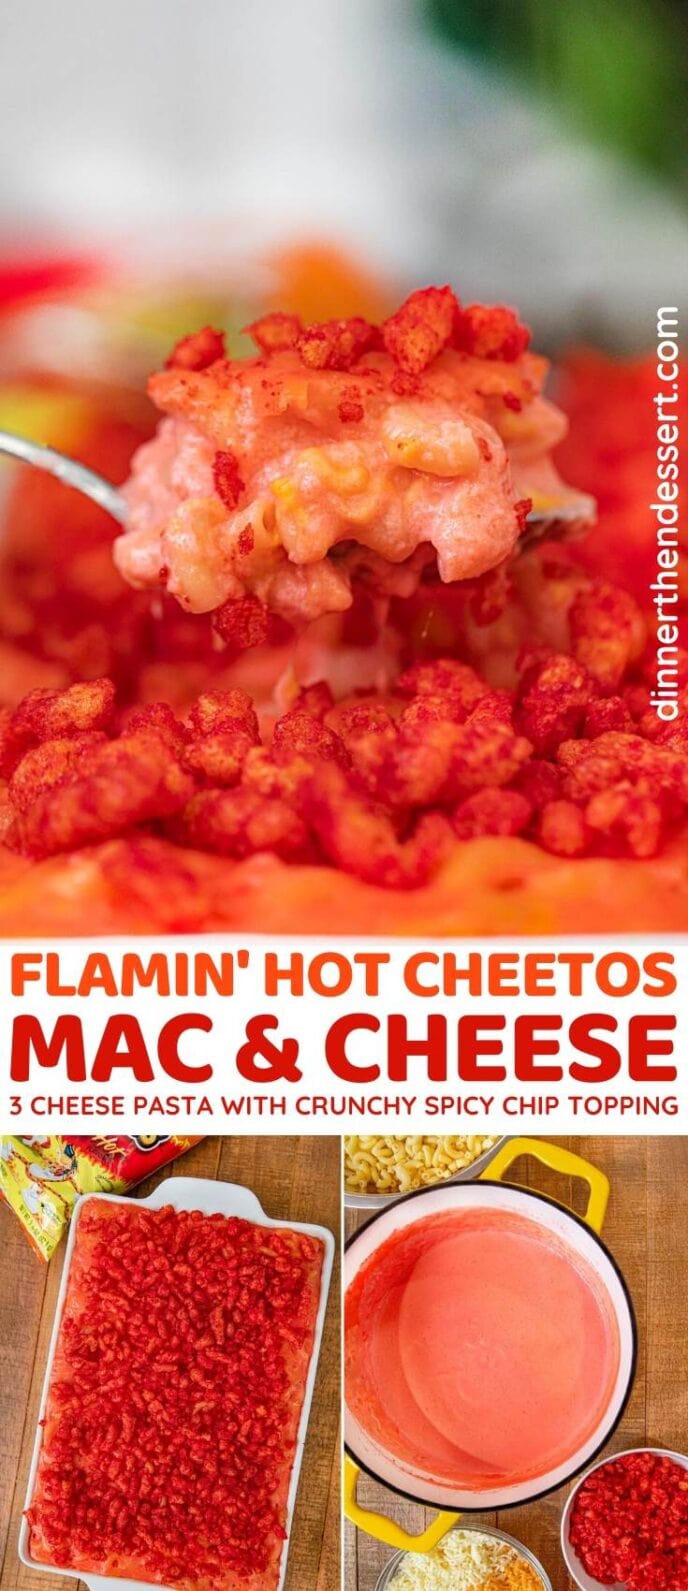 Flamin' Hot Cheetos Mac and Cheese collage